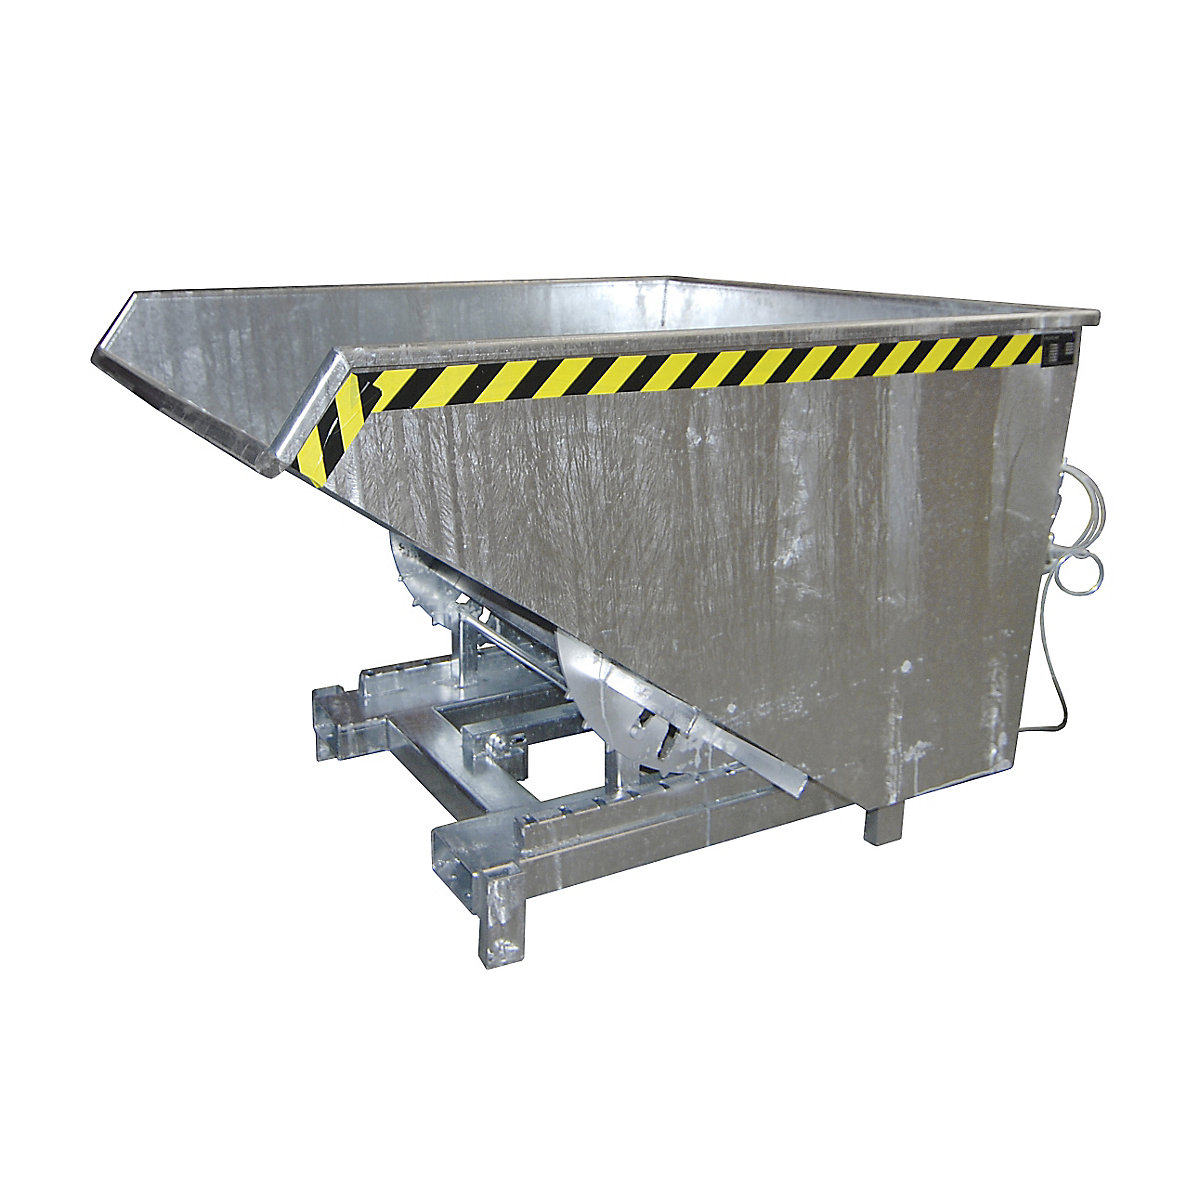 Heavy duty tilting skip – eurokraft pro, capacity 1.2 m³, max. load 4000 kg, hot dip galvanised in accordance with EN ISO 1461-11